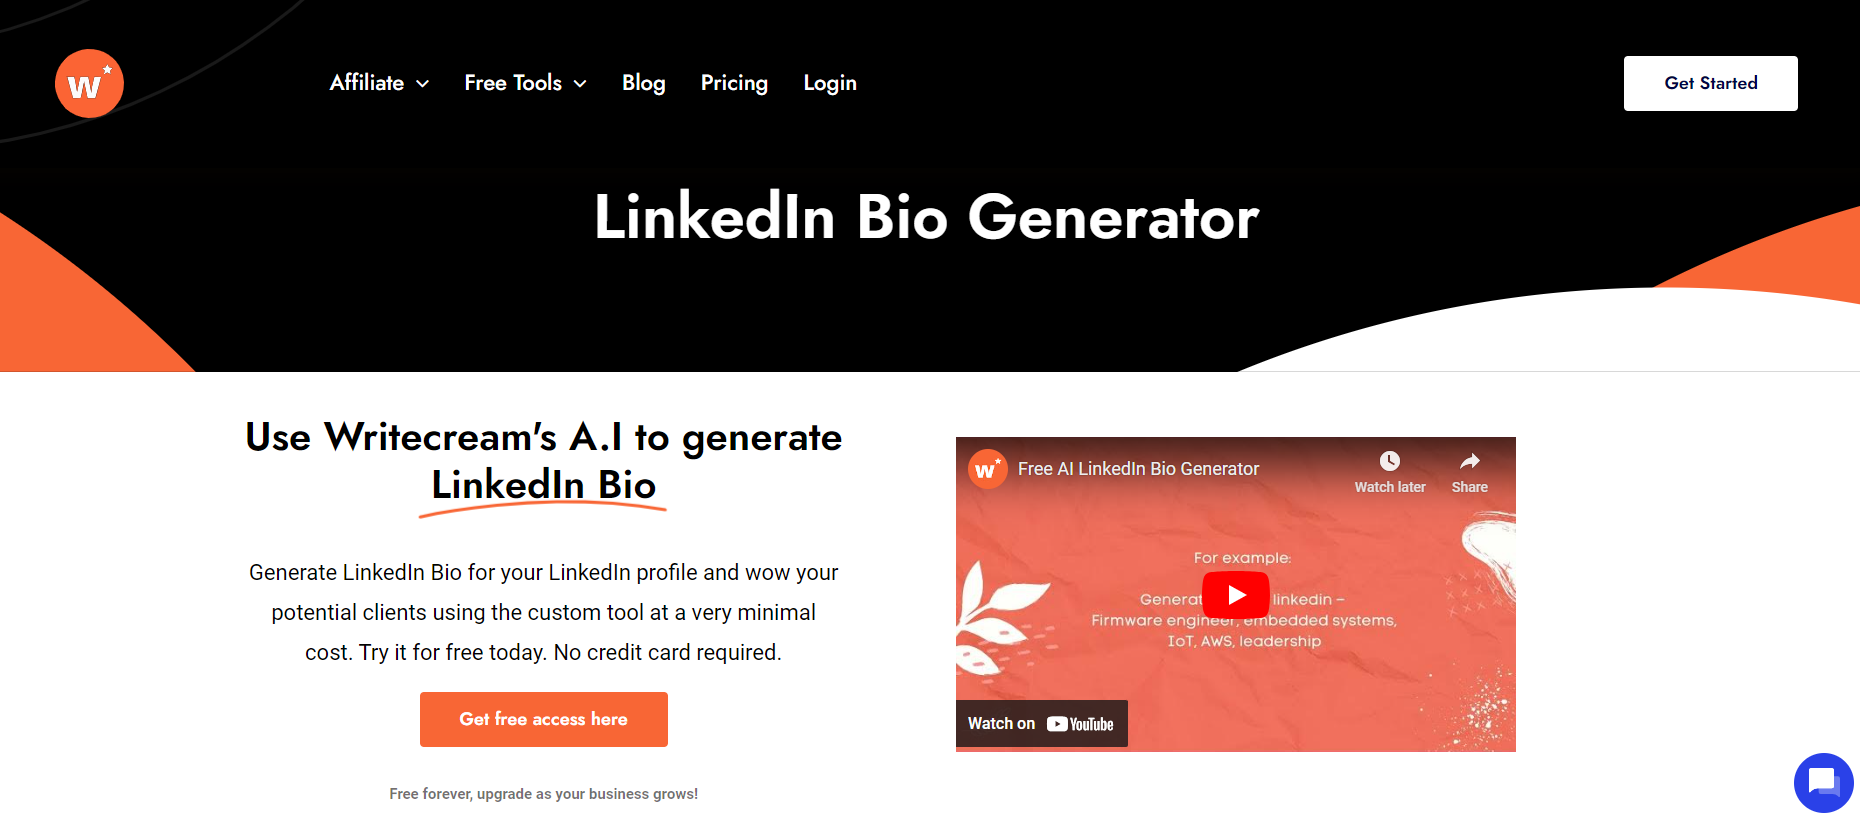 LinkedIn bio generator 11. Writecream 